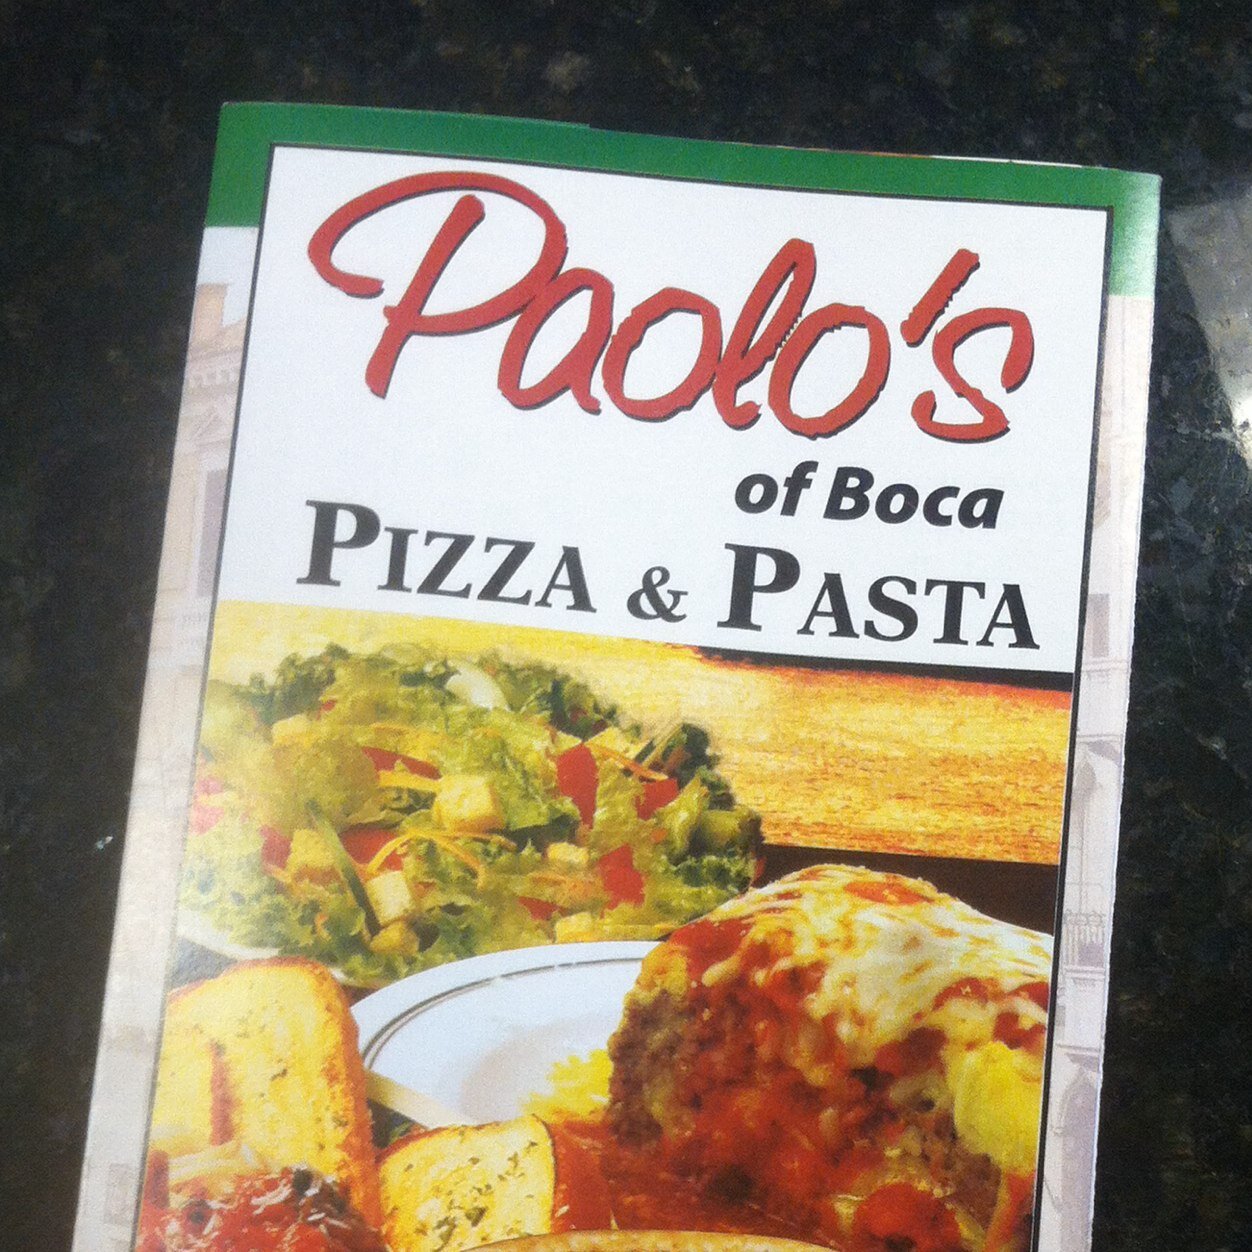 Paolo's of Boca Pizza & Pasta
1365 W. Palmetto Park Road, Boca Raton
561-245-7563
Open 7 days a week 11am-10pm